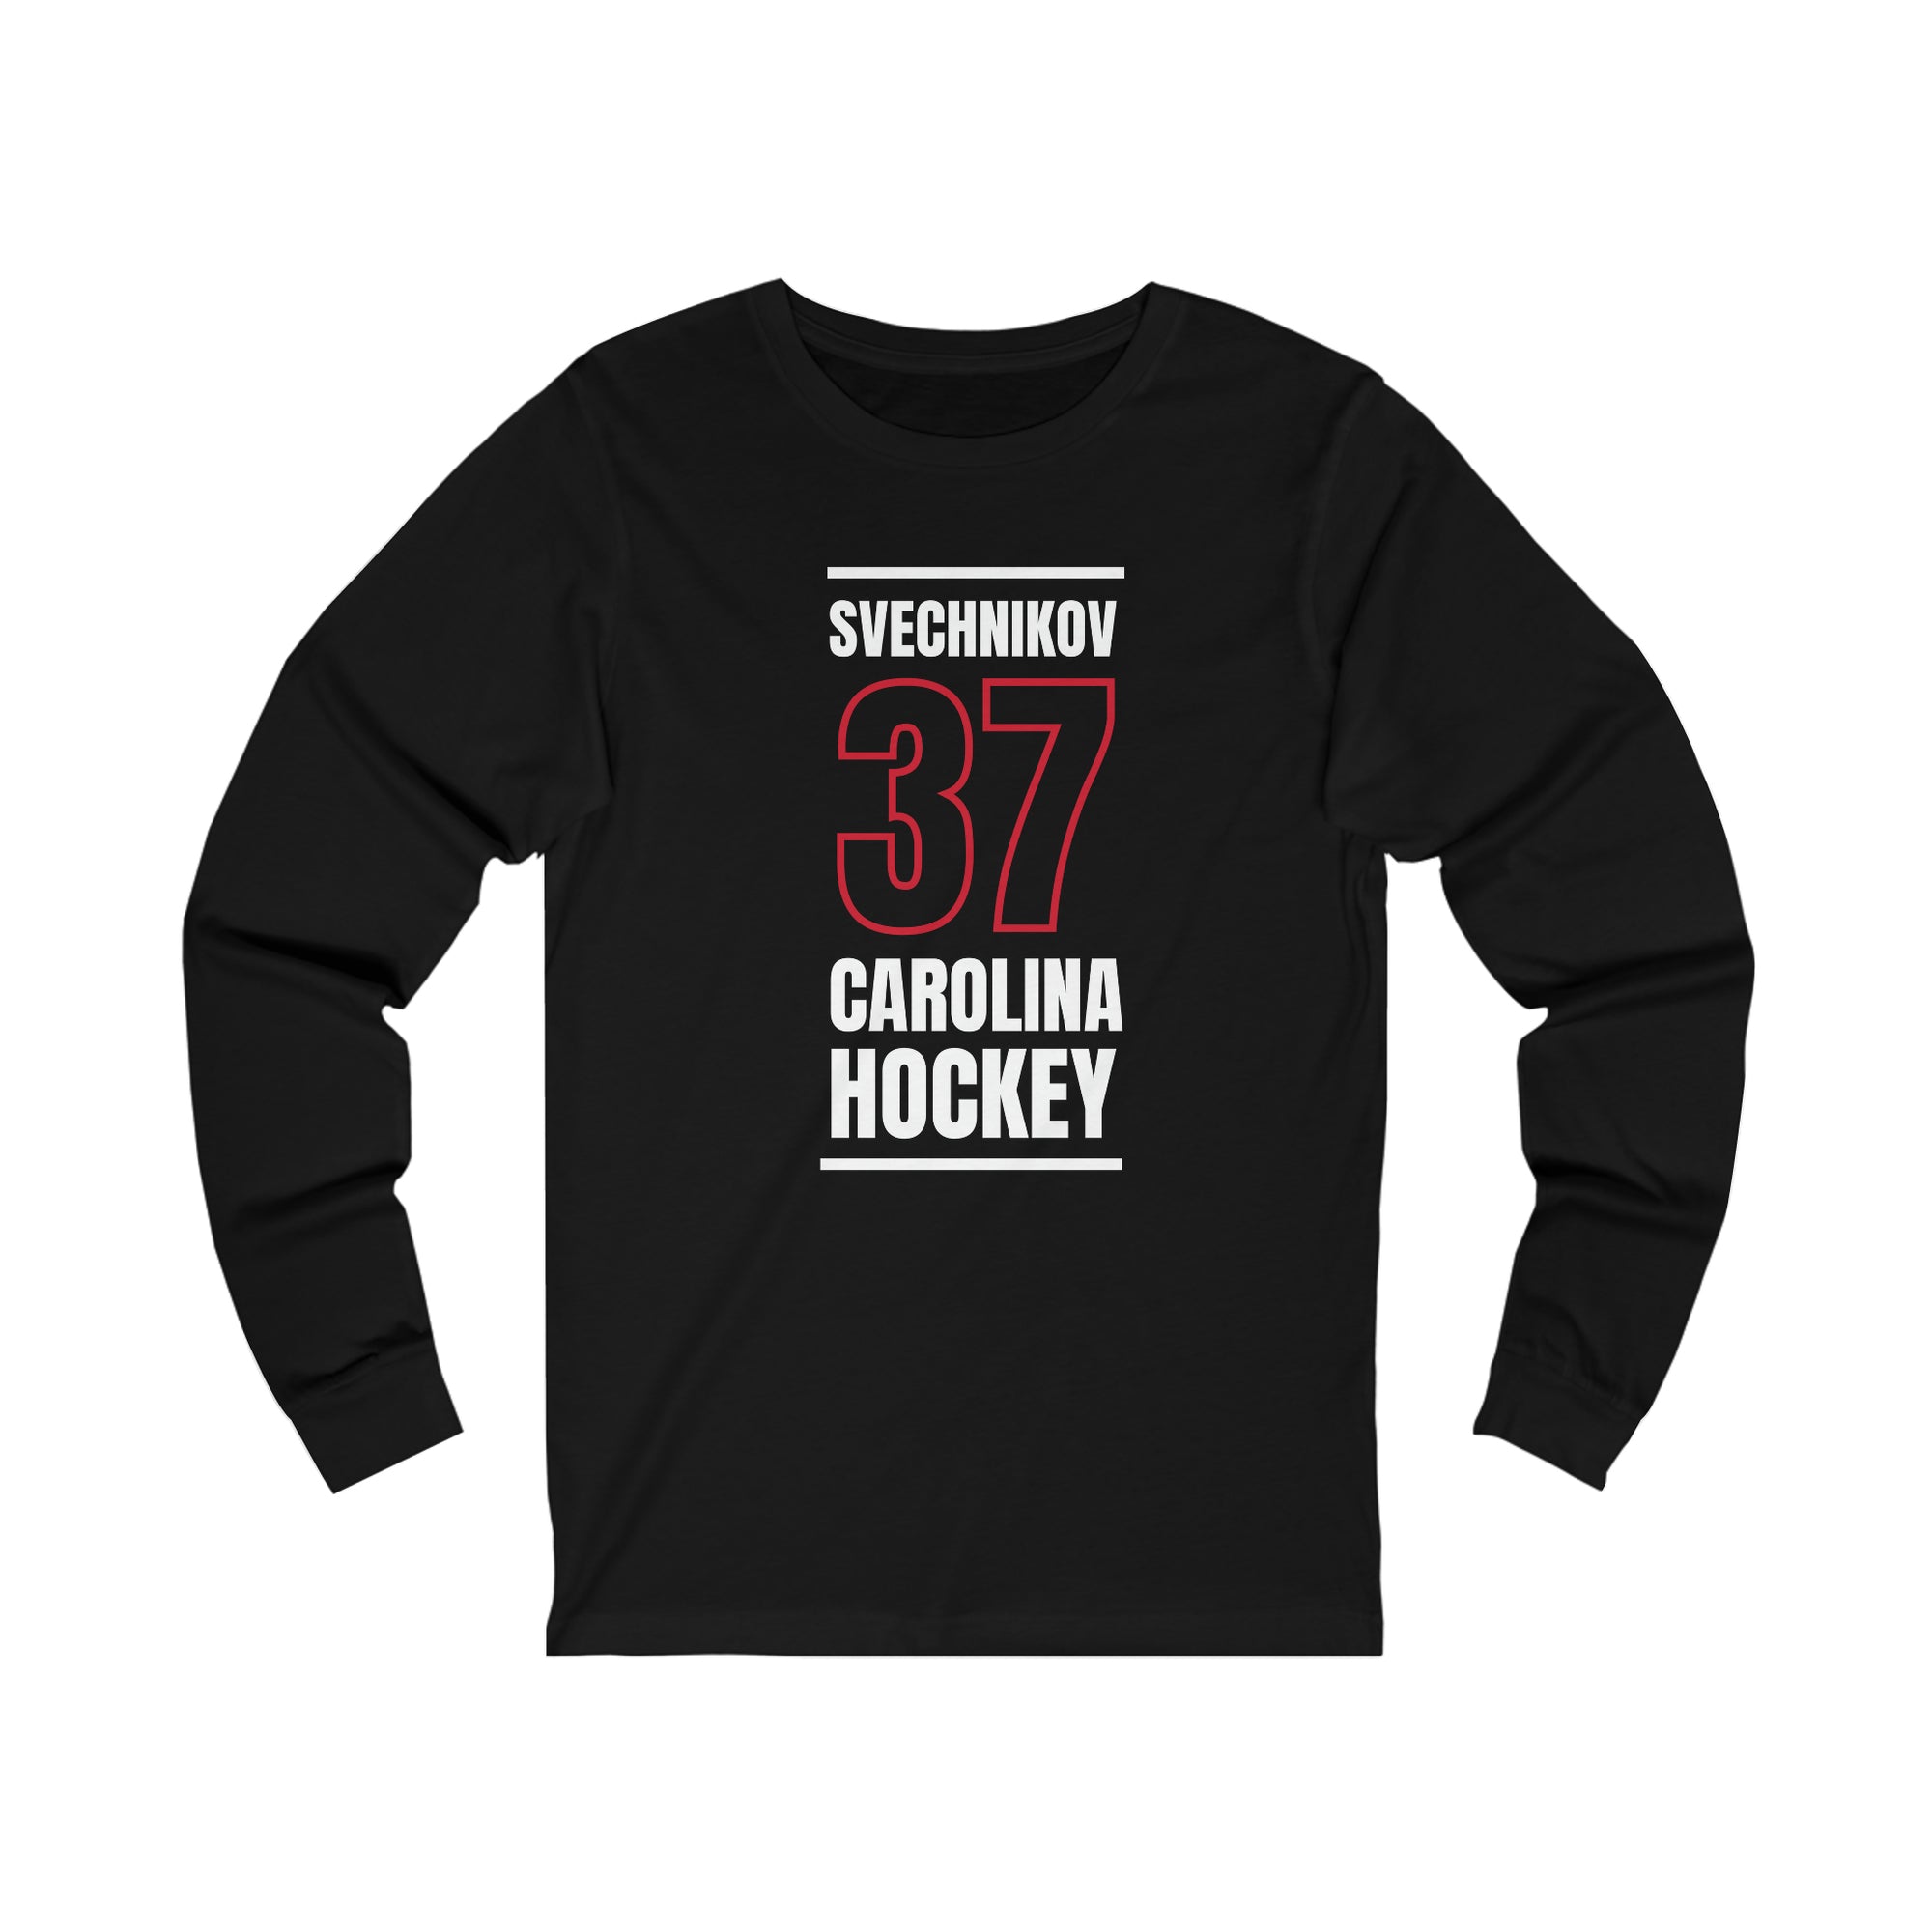 Svechnikov 37 Carolina Hockey Black Vertical Design Unisex Jersey Long Sleeve Shirt